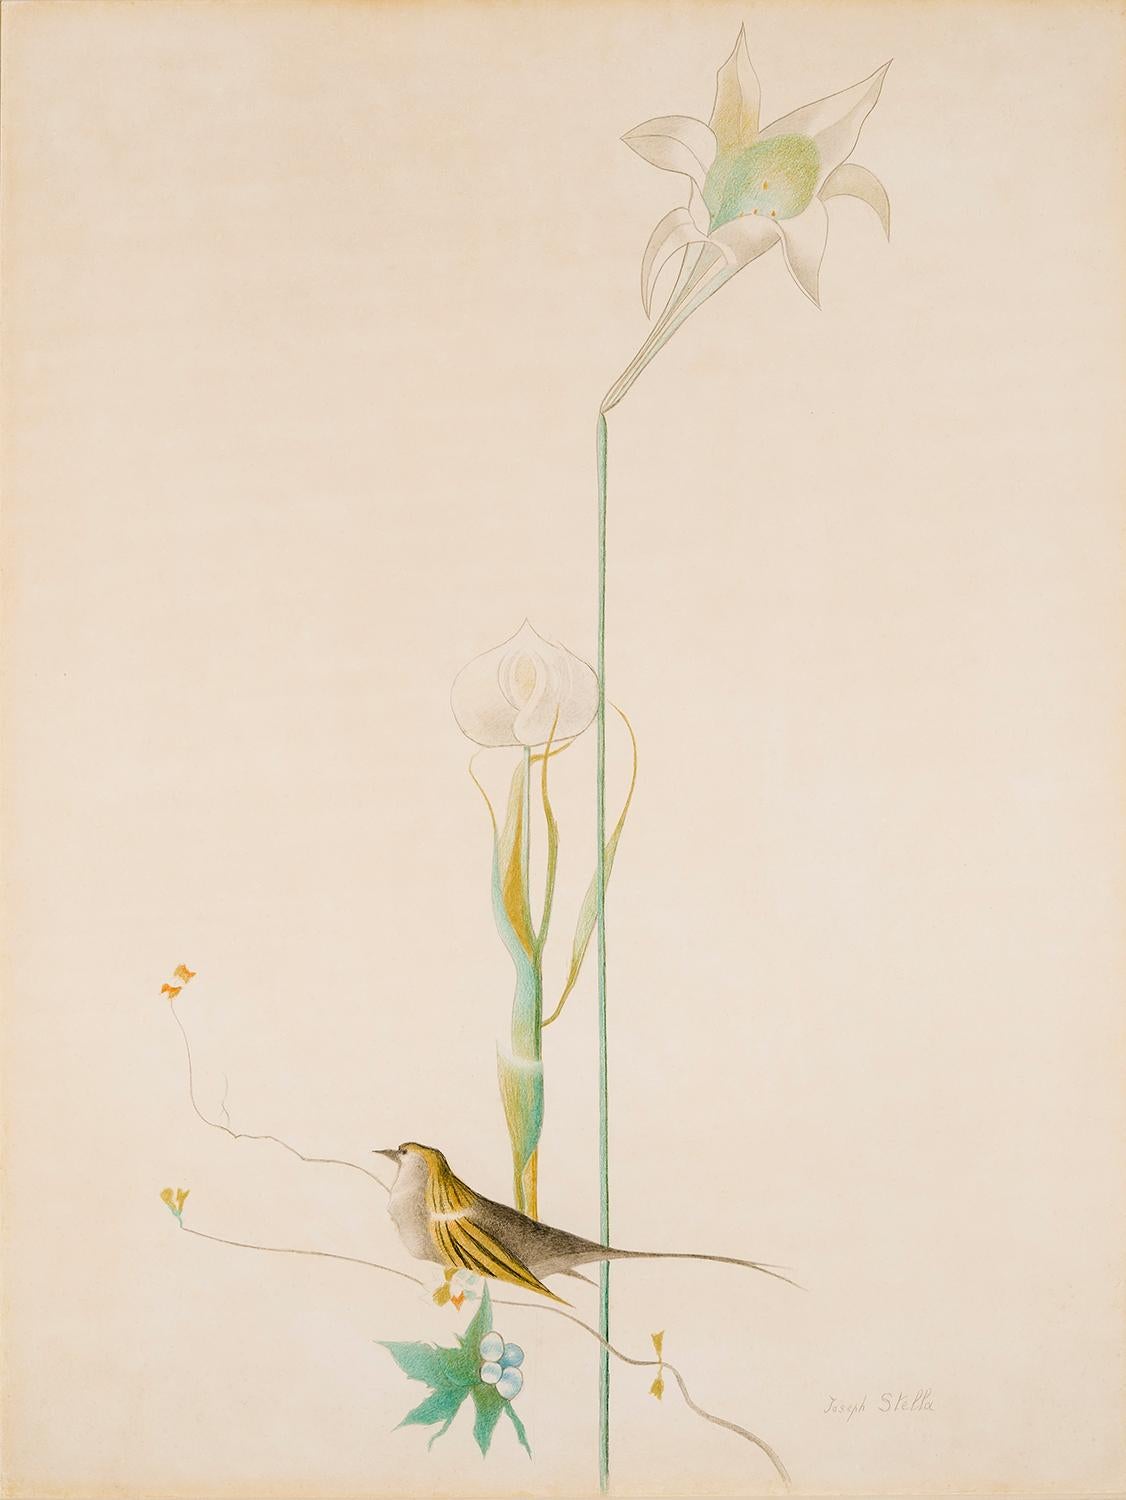 Joseph Stella Animal Art - Lily and Bird